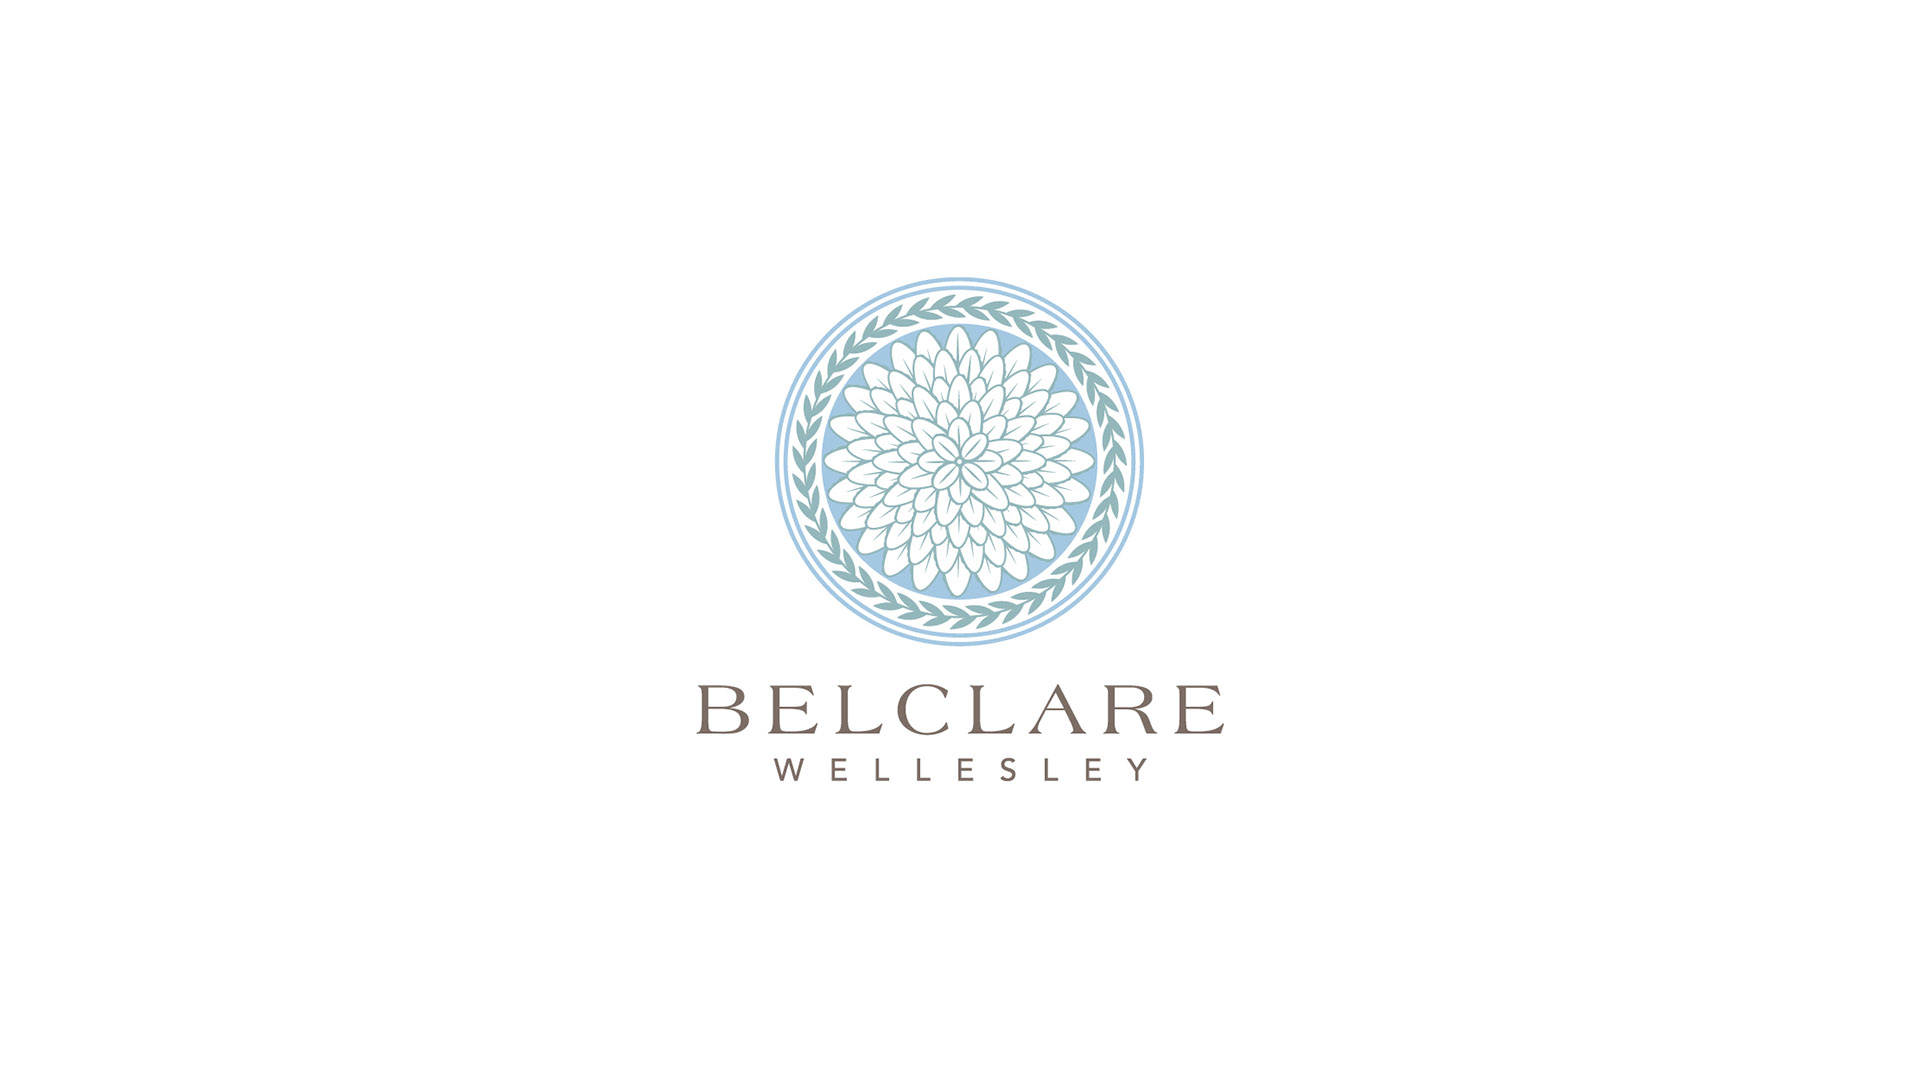 belclare wellesley logo on white